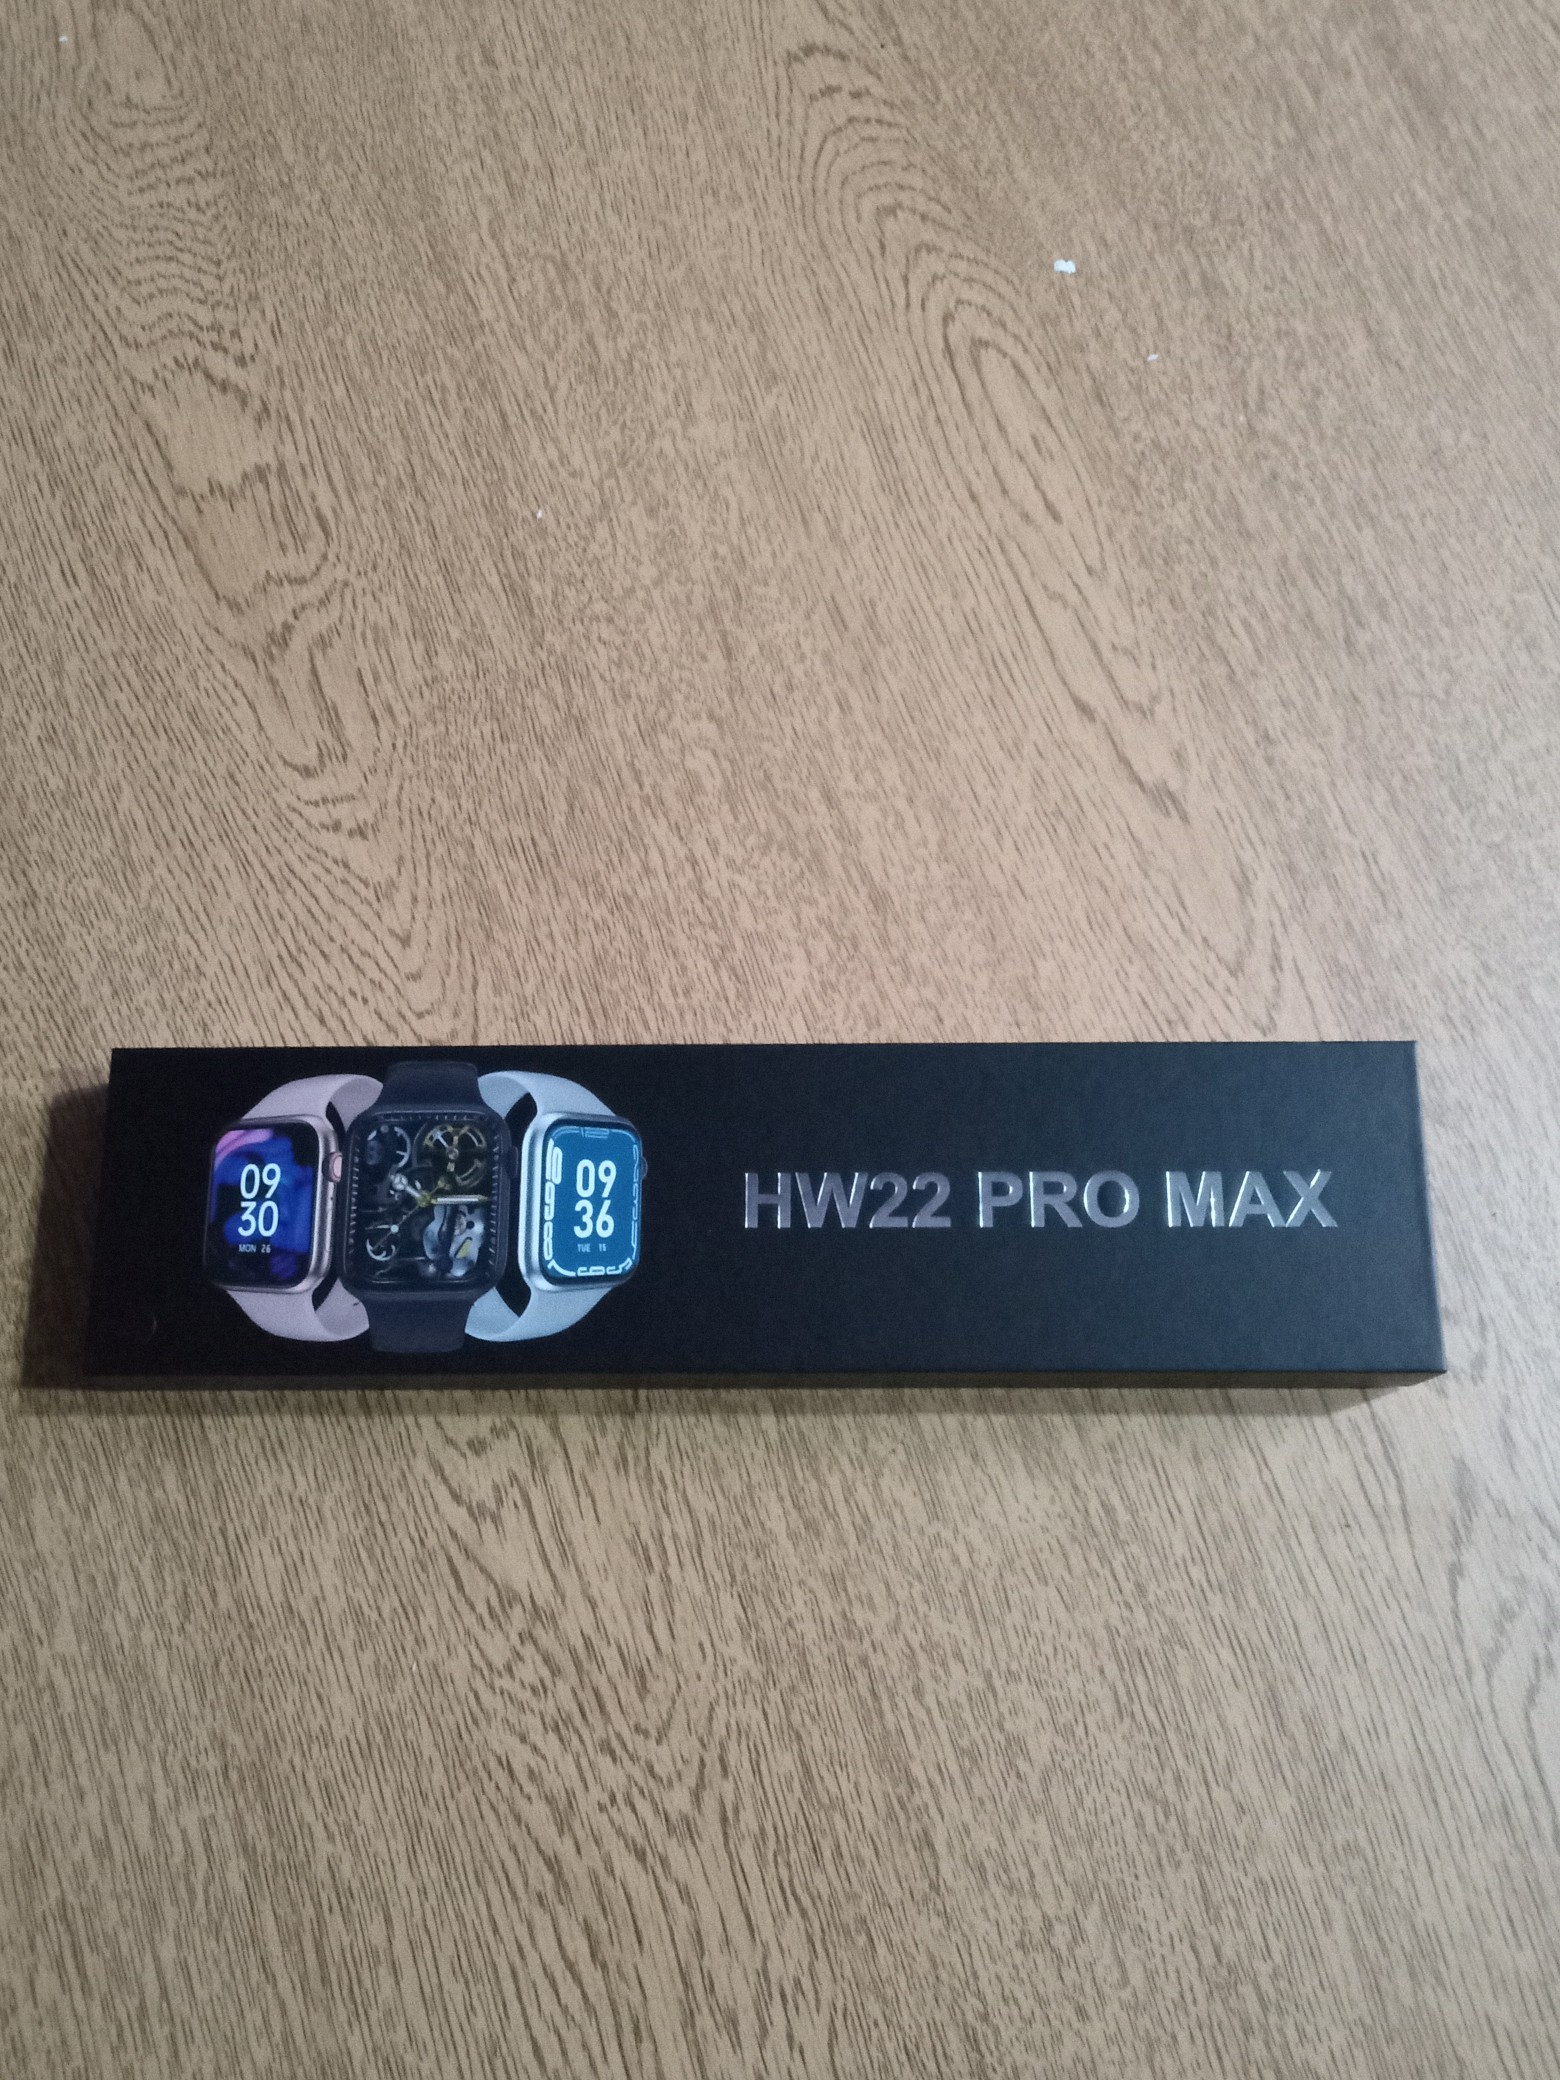 accesorios para electronica - Reloj Smart watch HW22 Pro Max Serie 7  0